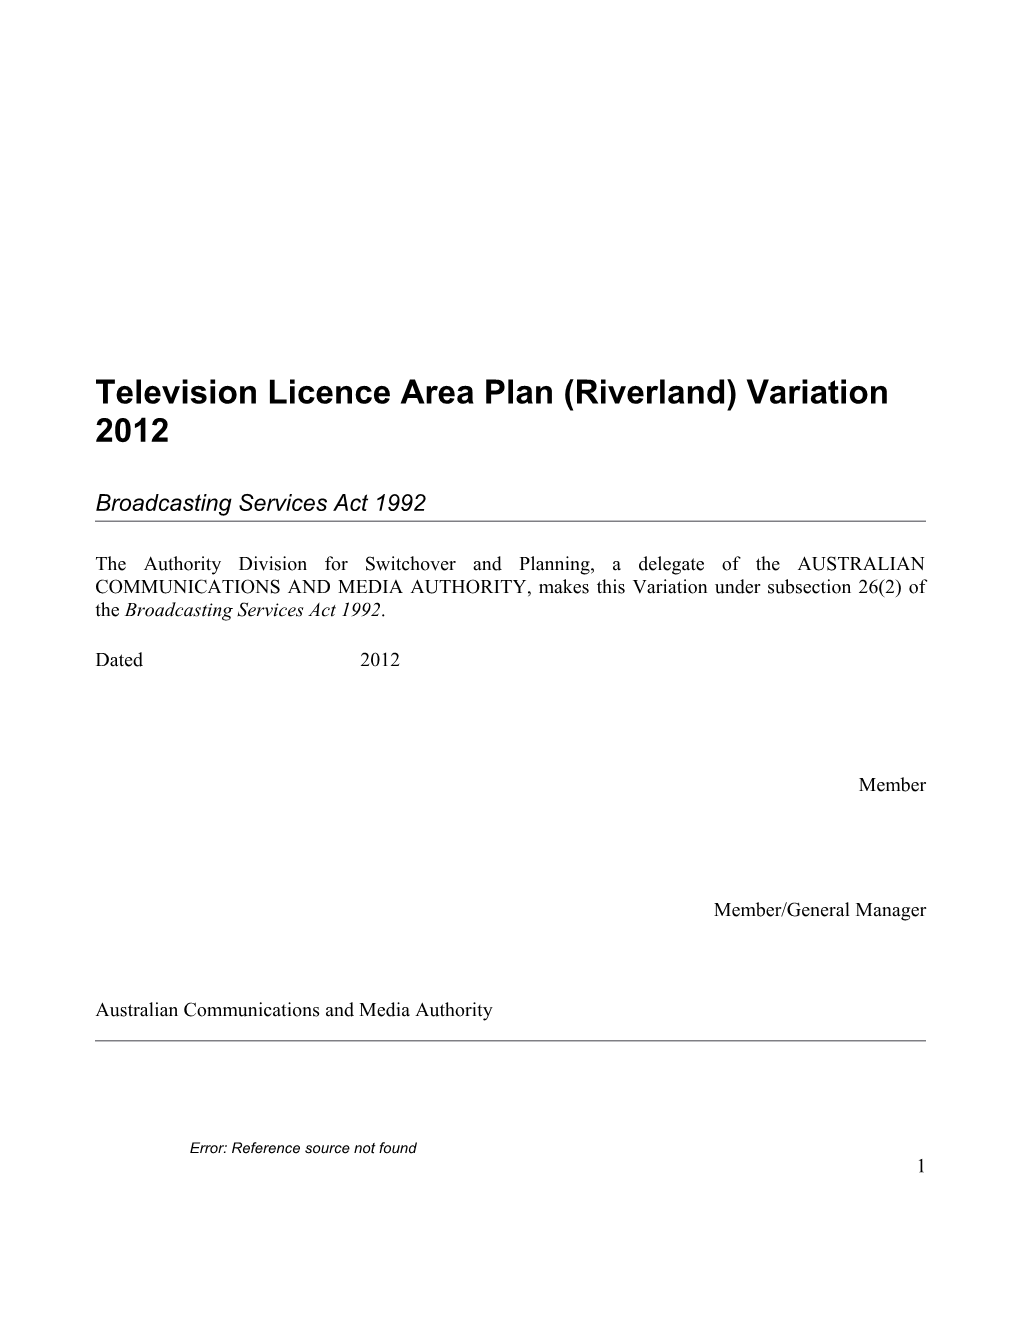 Television Licence Area Plan (Riverland) Variation 2012